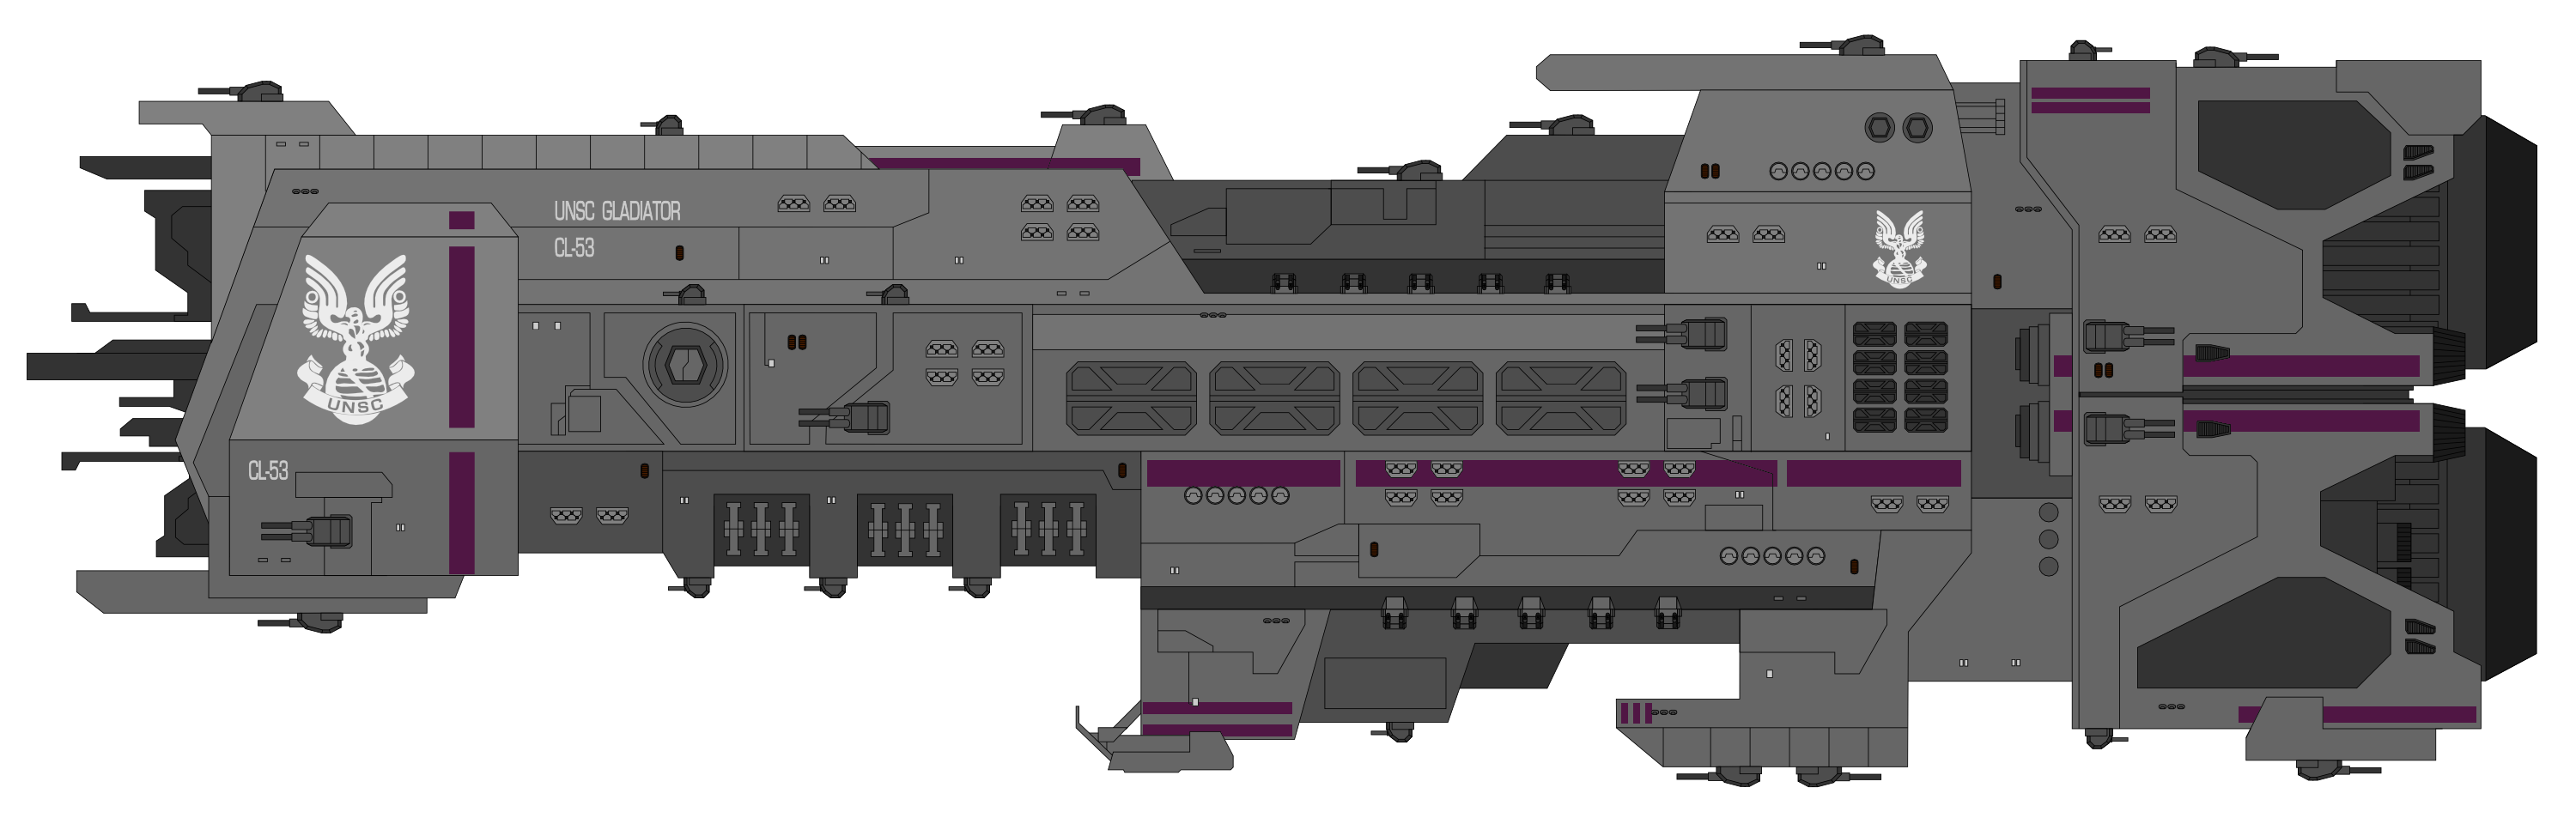 Gladiator Class Light Cruiser Halo Fanon Fandom - halo ship roblox